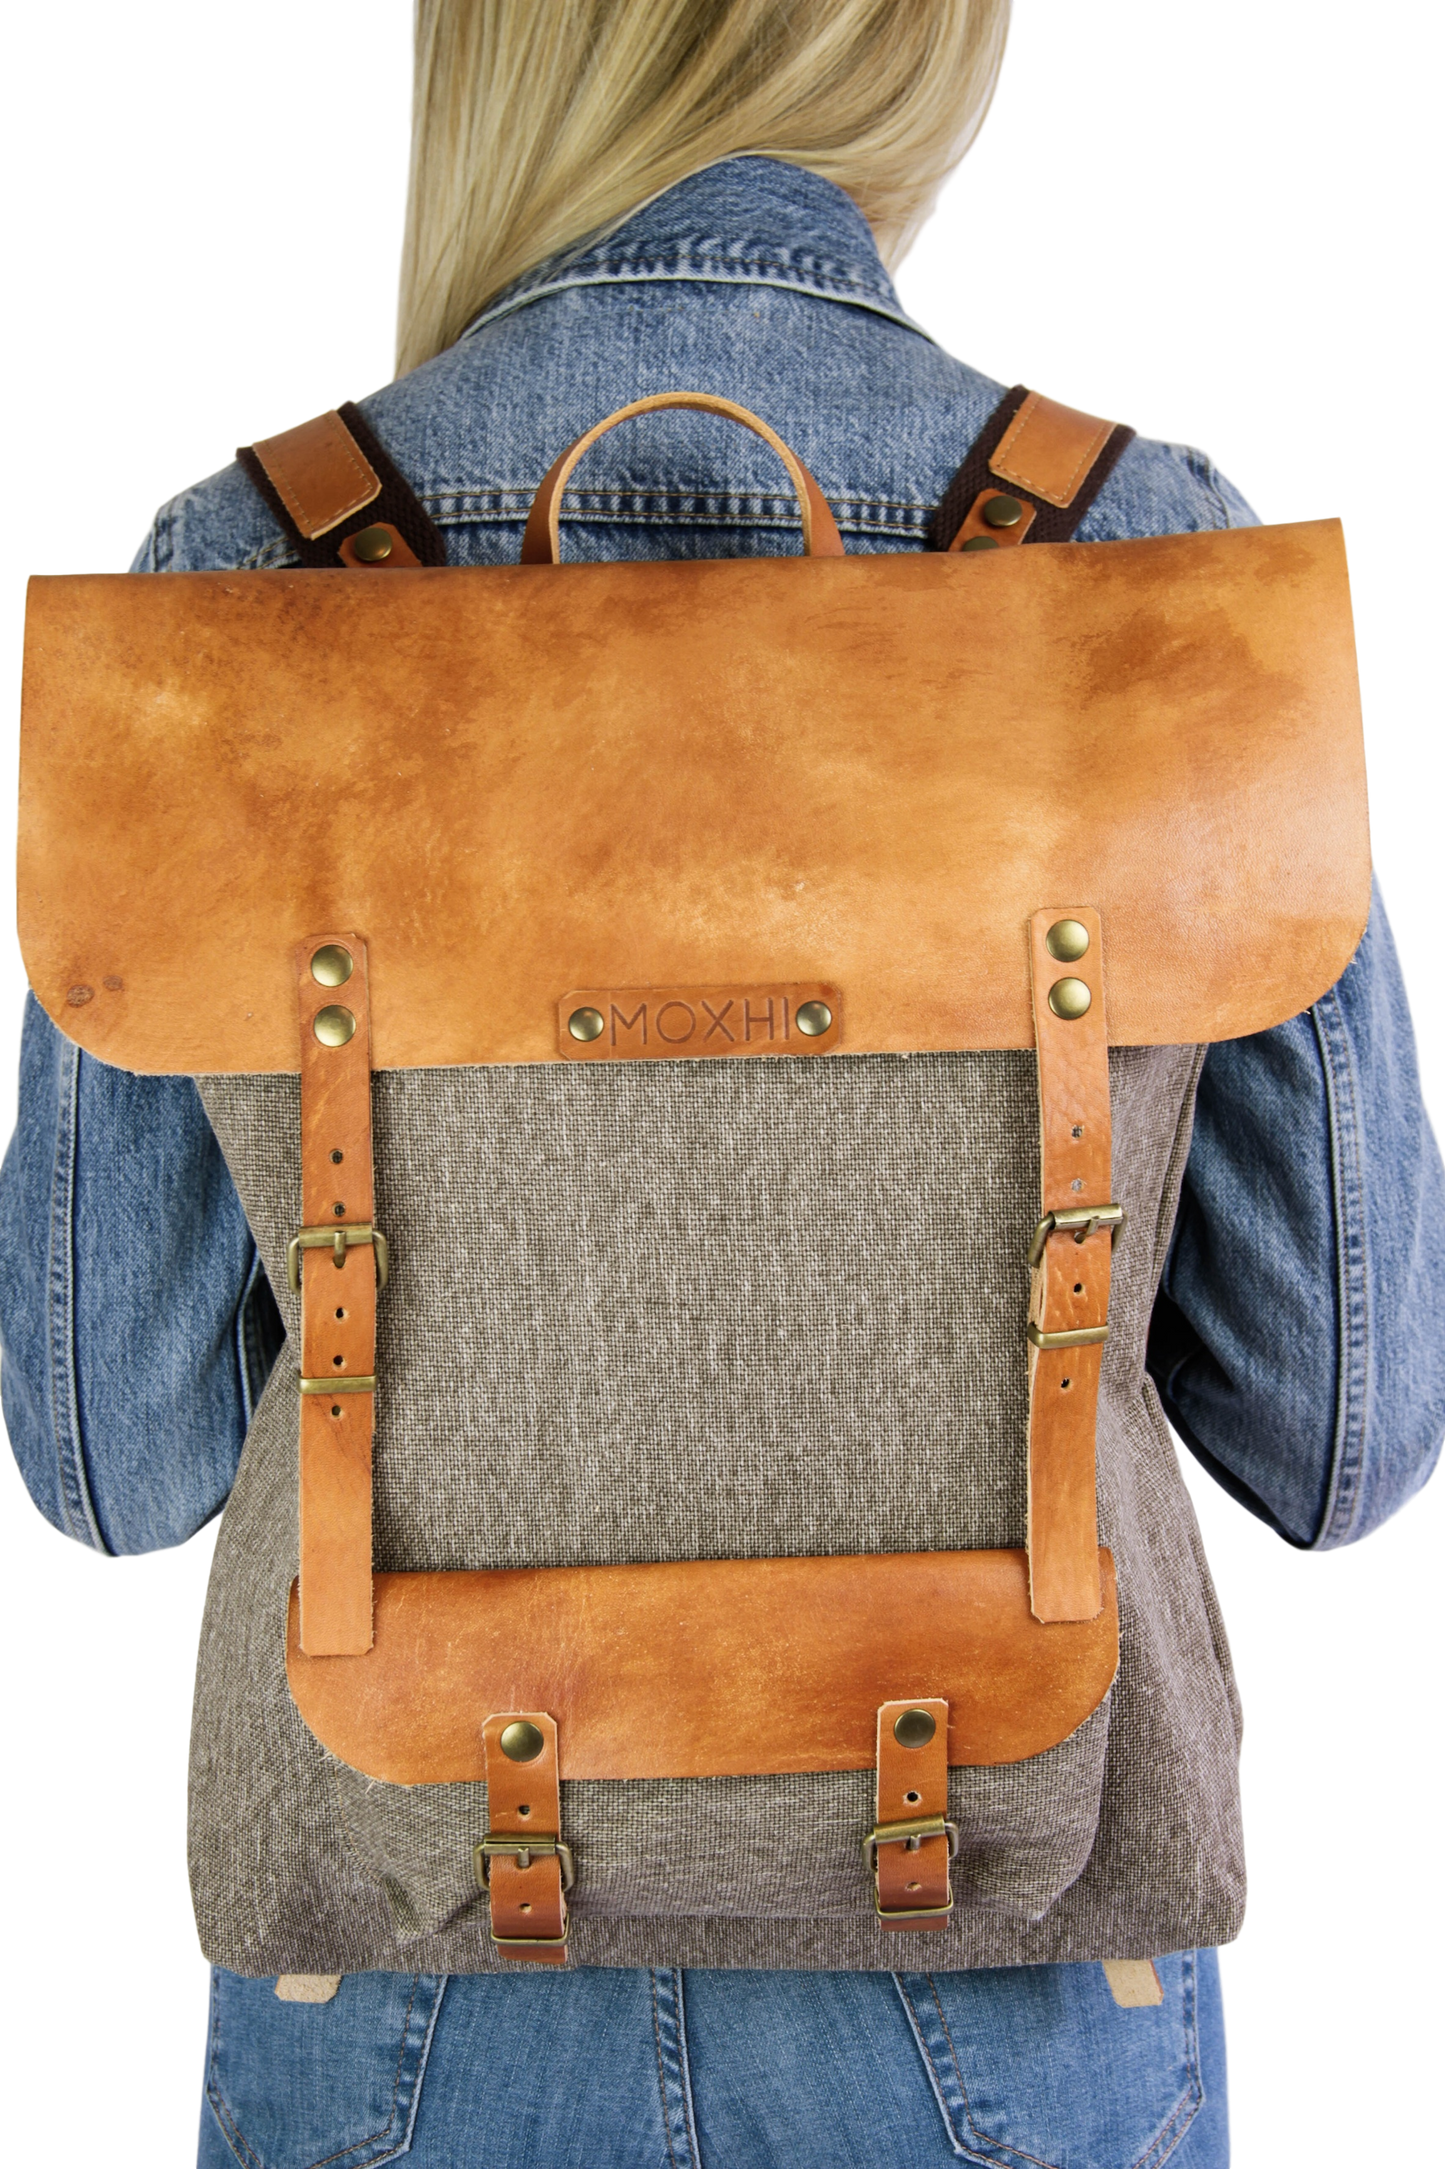 Handmade backpack vintage sustainable